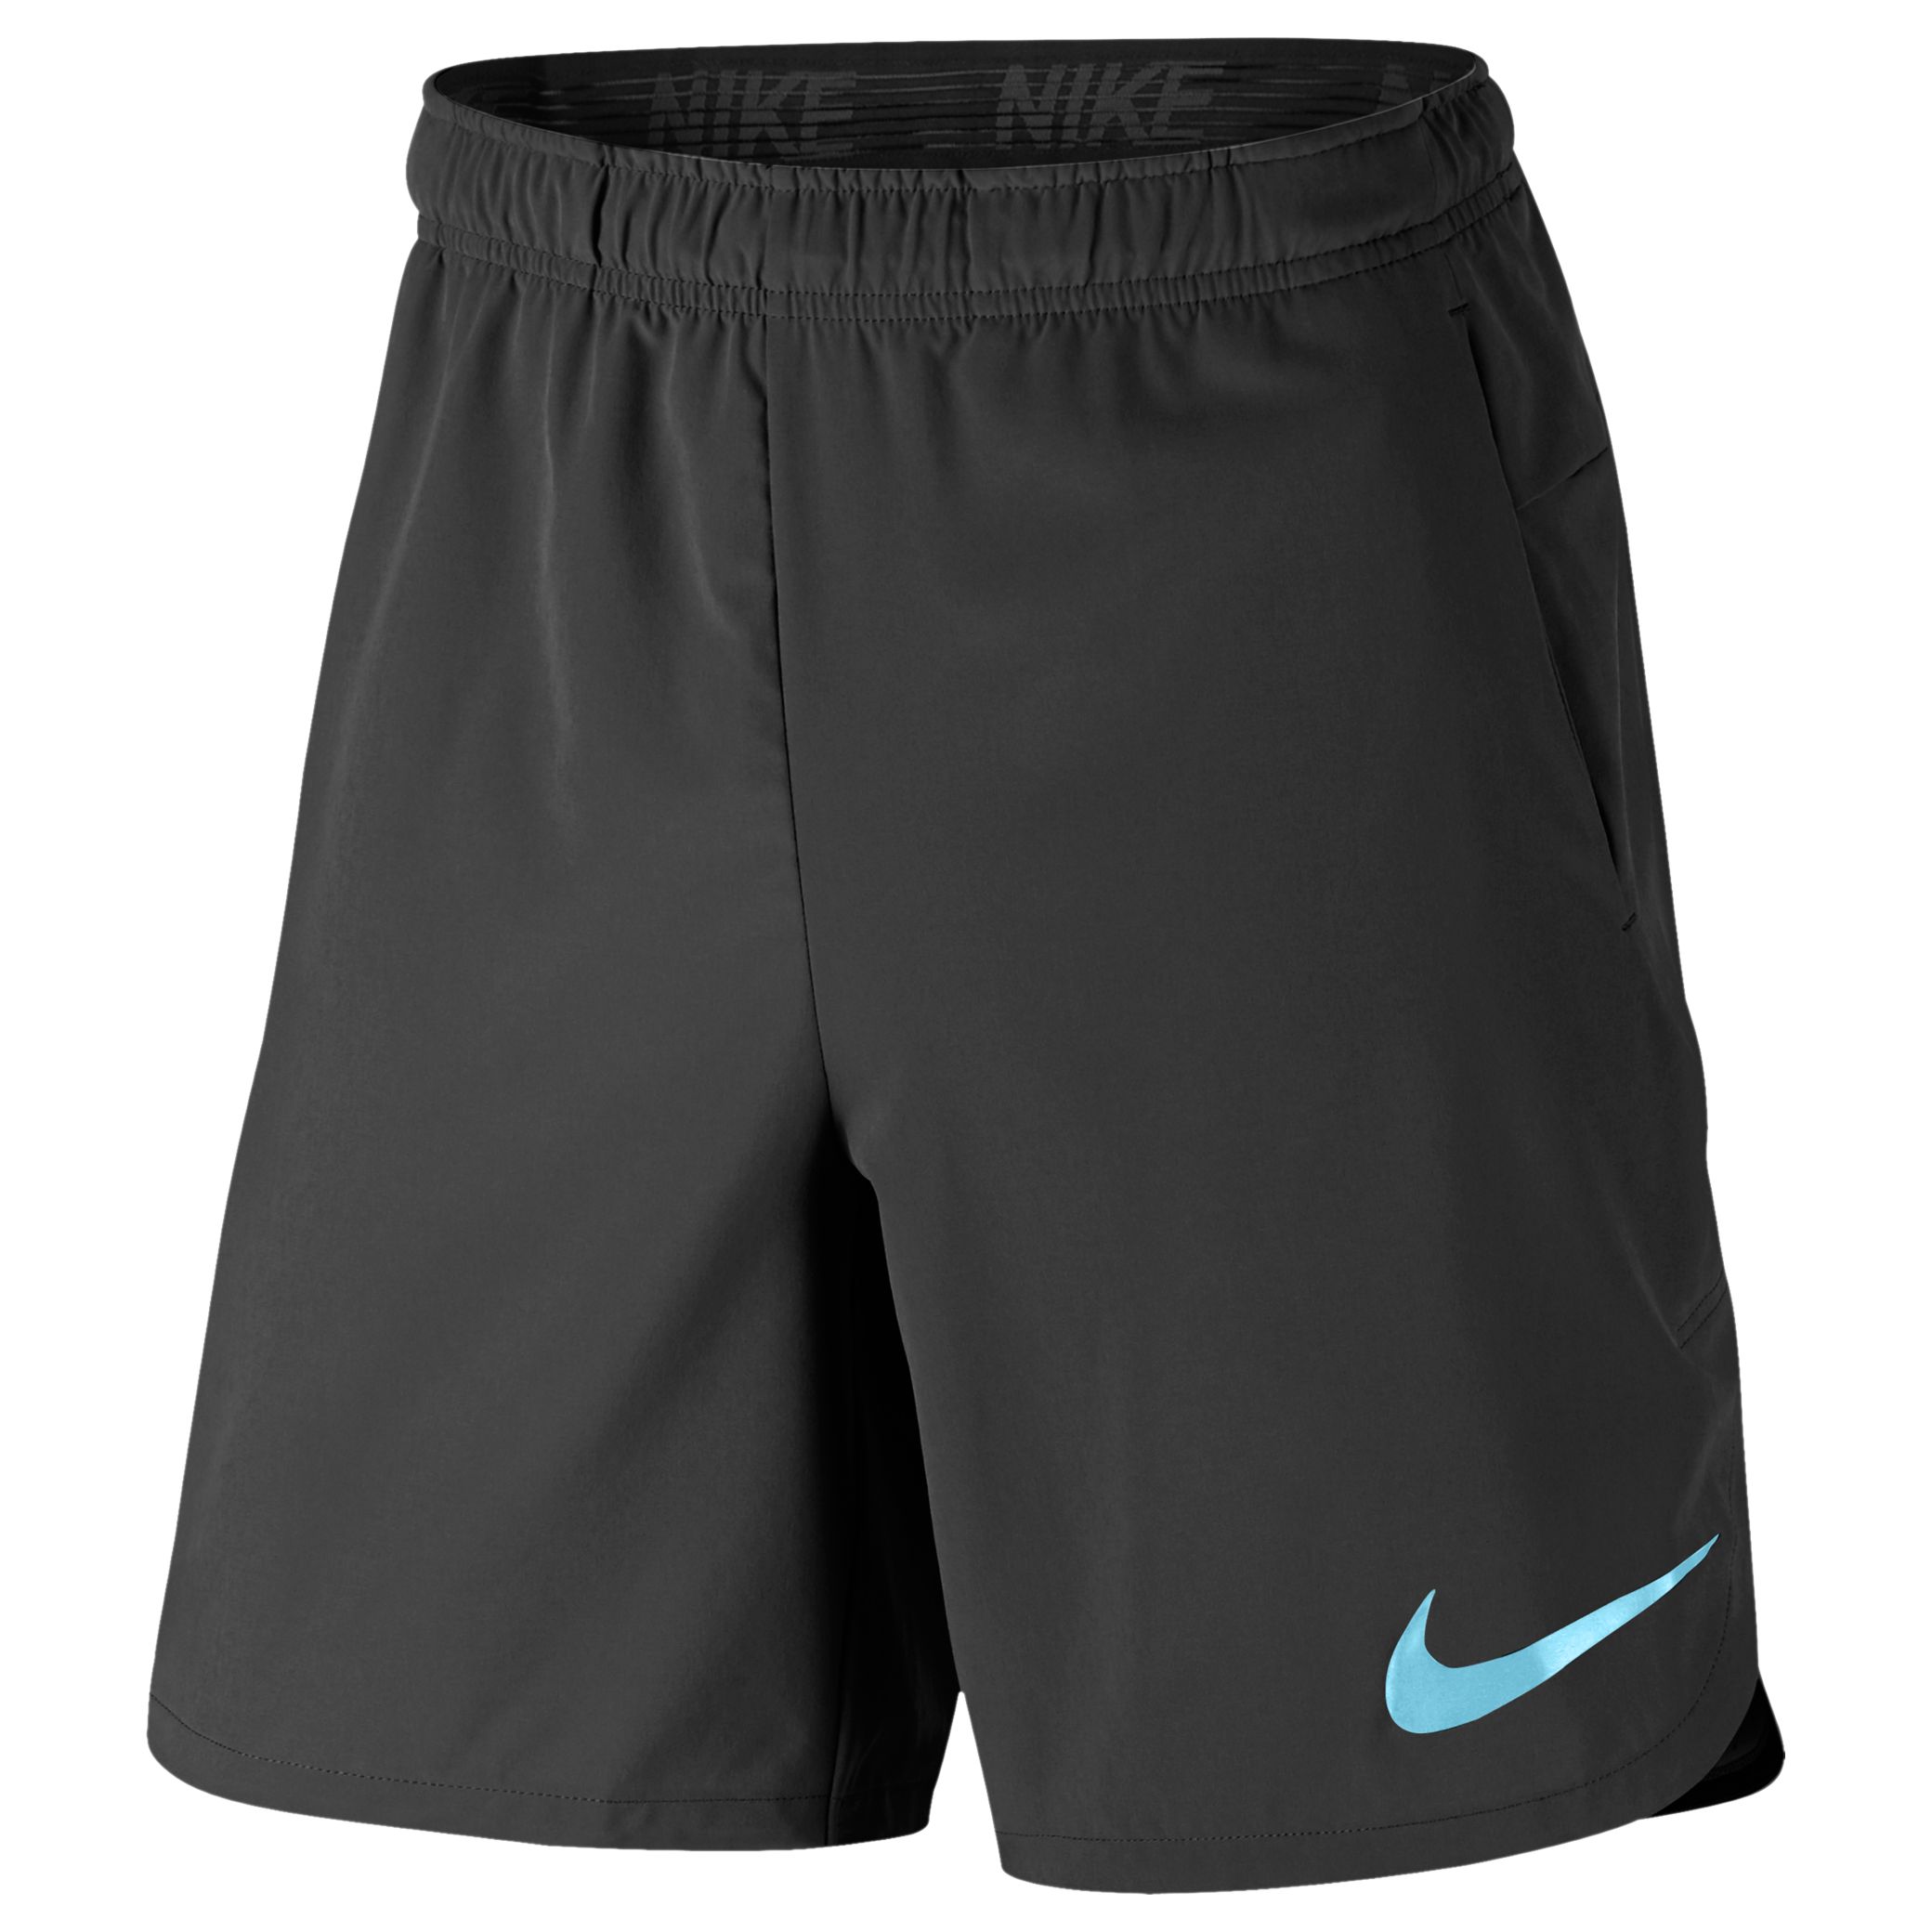 Nike Flex Training Shorts, Black/Blue, L